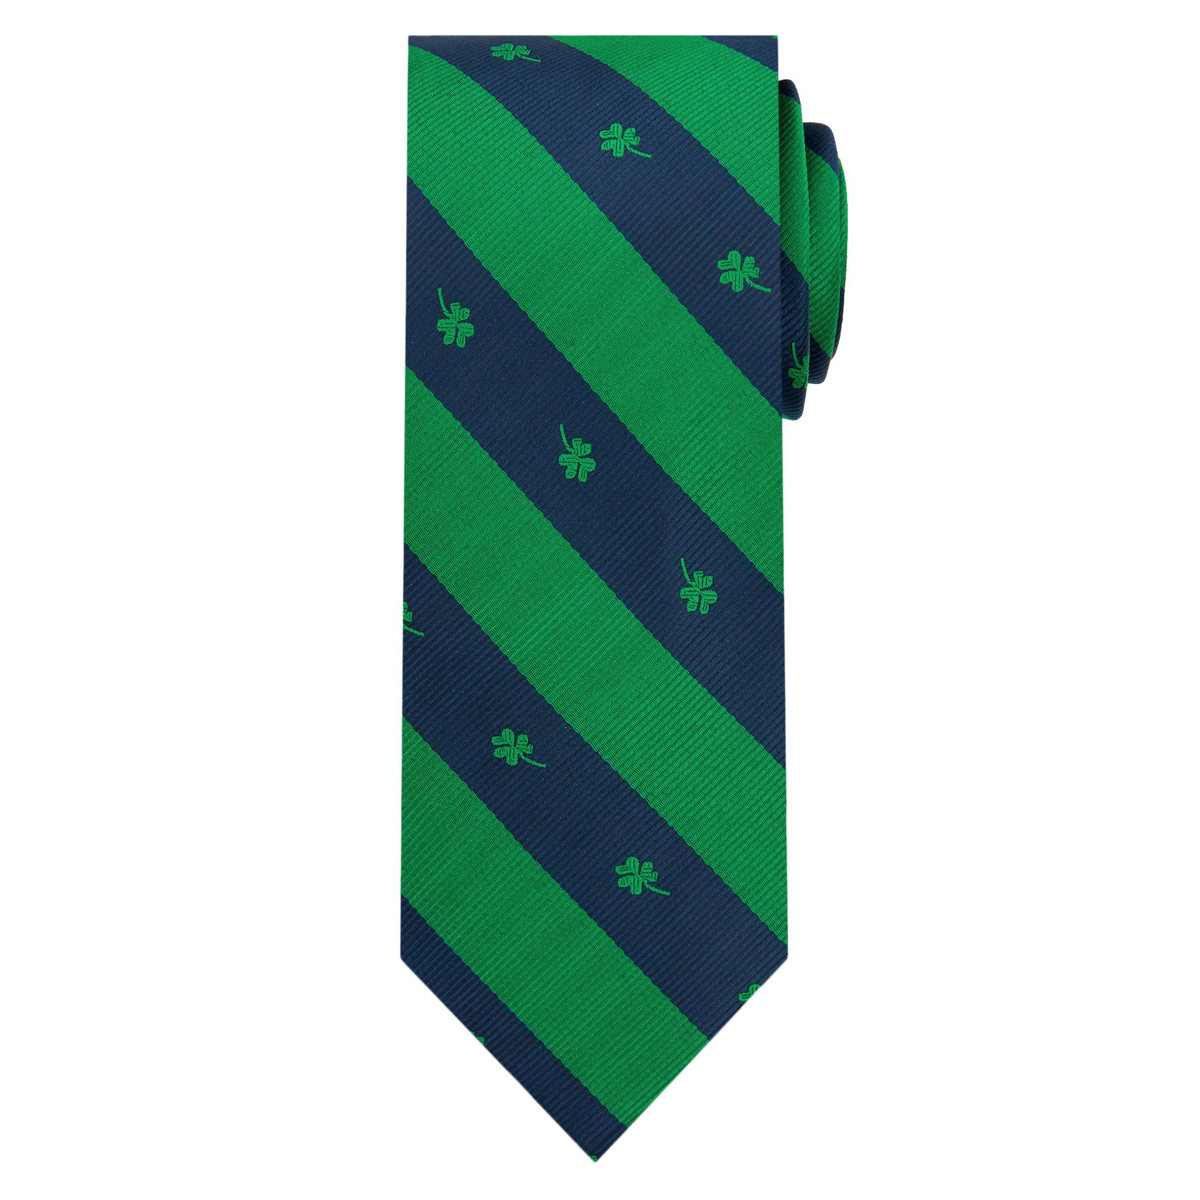 Men's Woven Stripe Shamrocks Neck Tie - Navy Blue Green